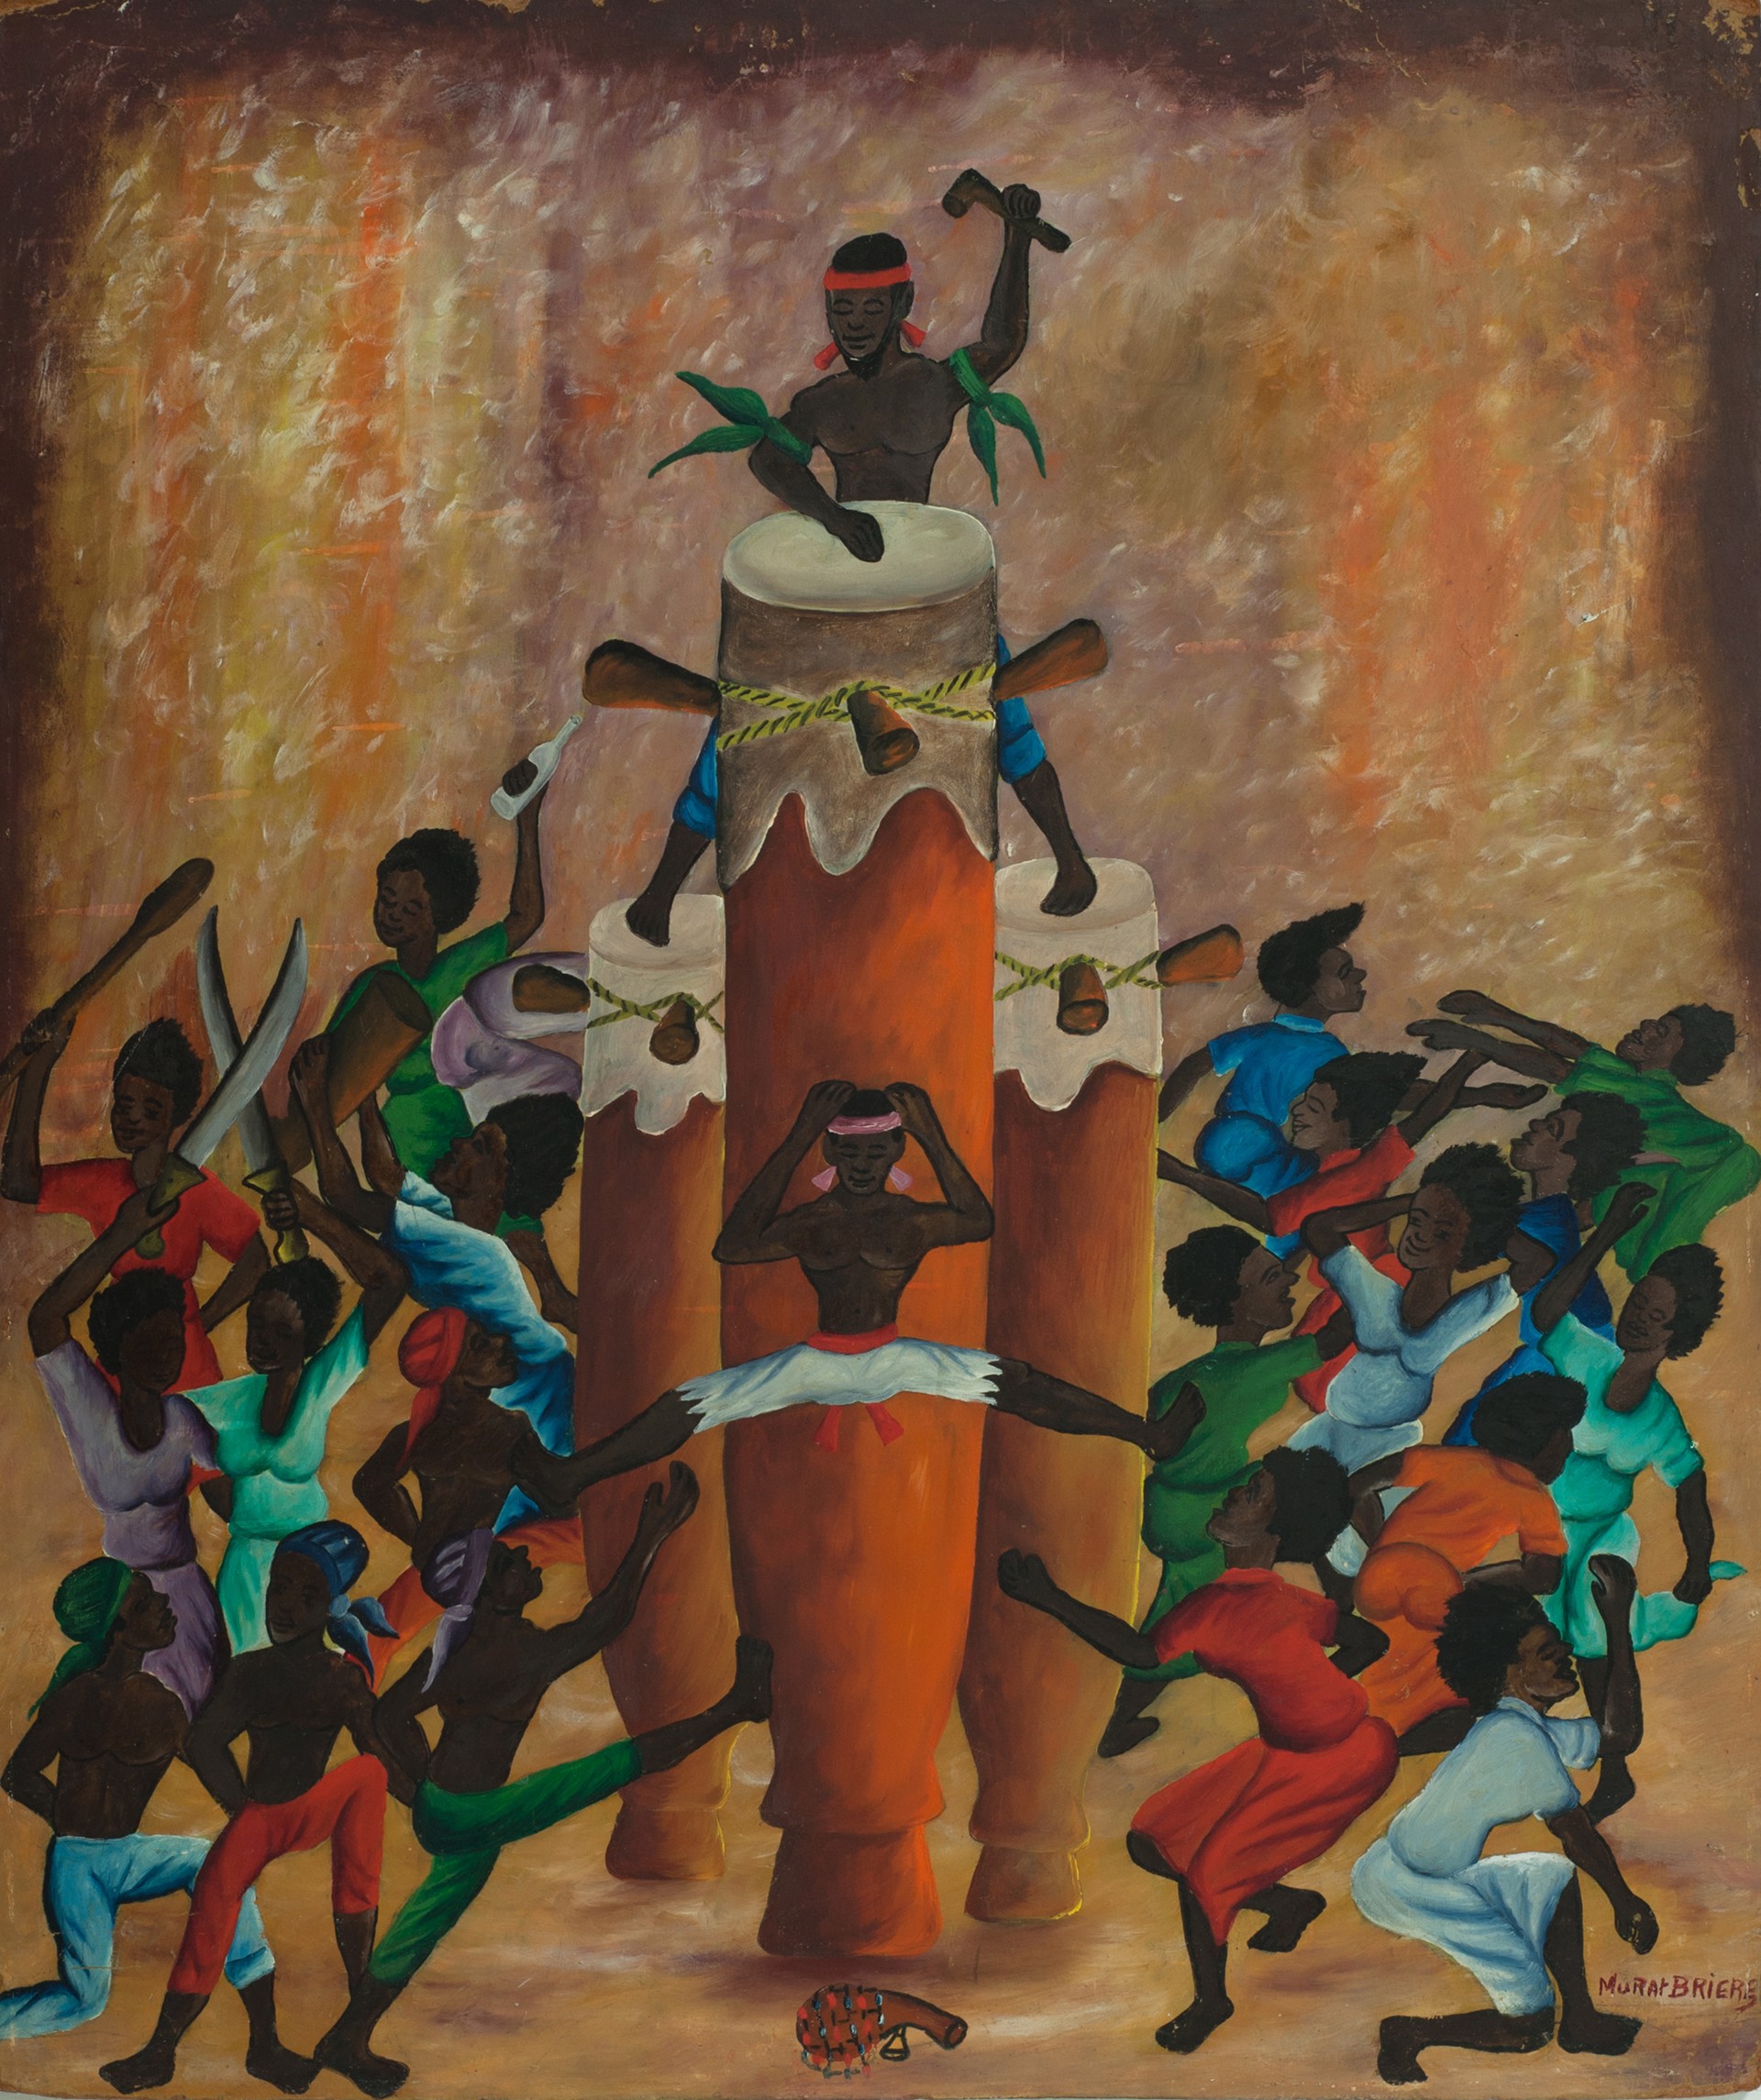 Drums & Dance #6-10-88GSN by Murat Brierre (Haitian, 1938-1988)